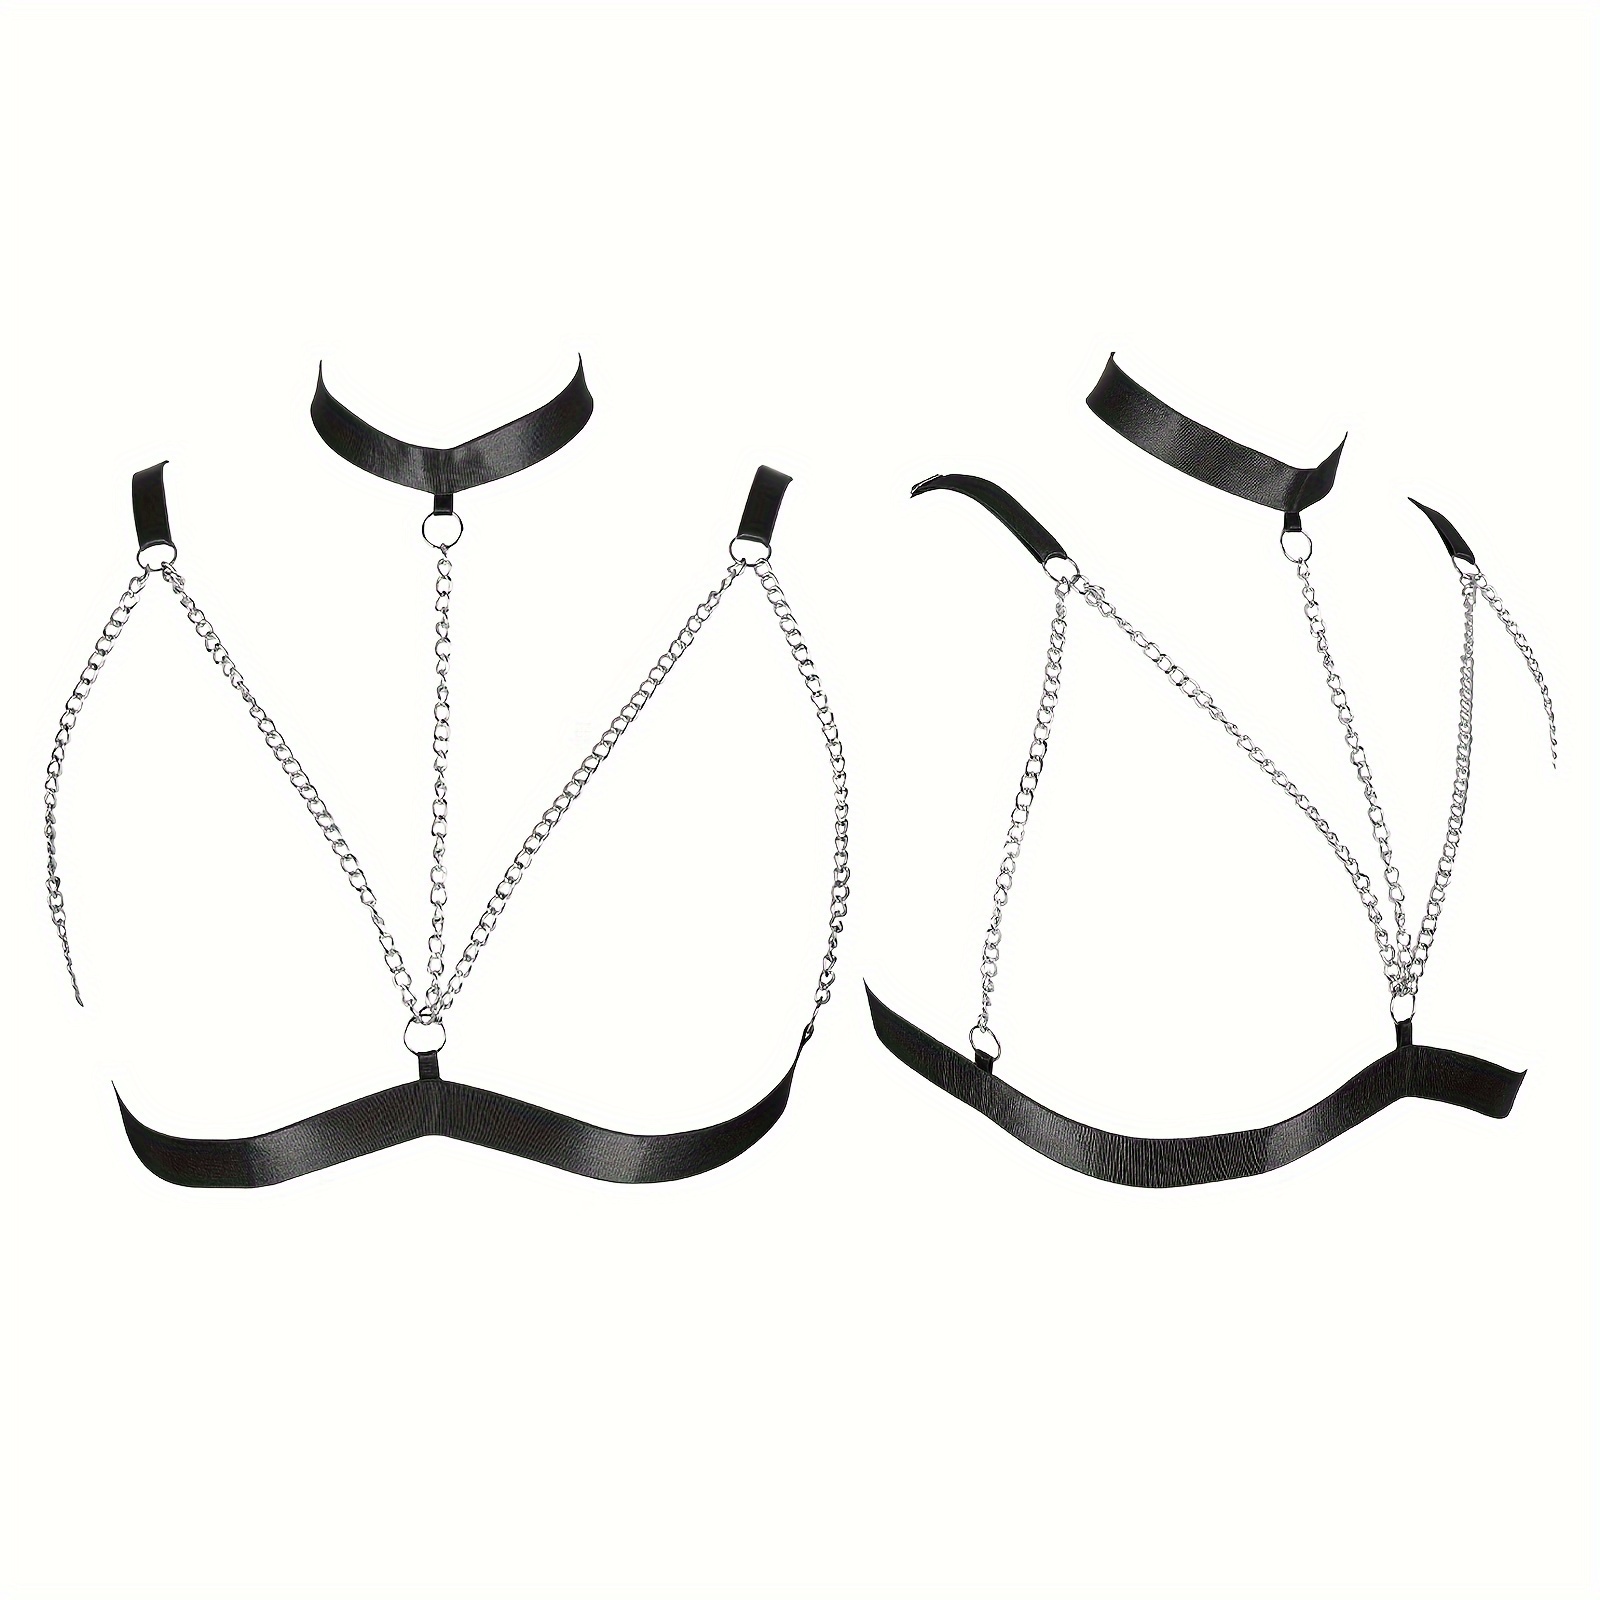 Plus Size Women Harness Body Chain Full Cage Cupless Bra Chain